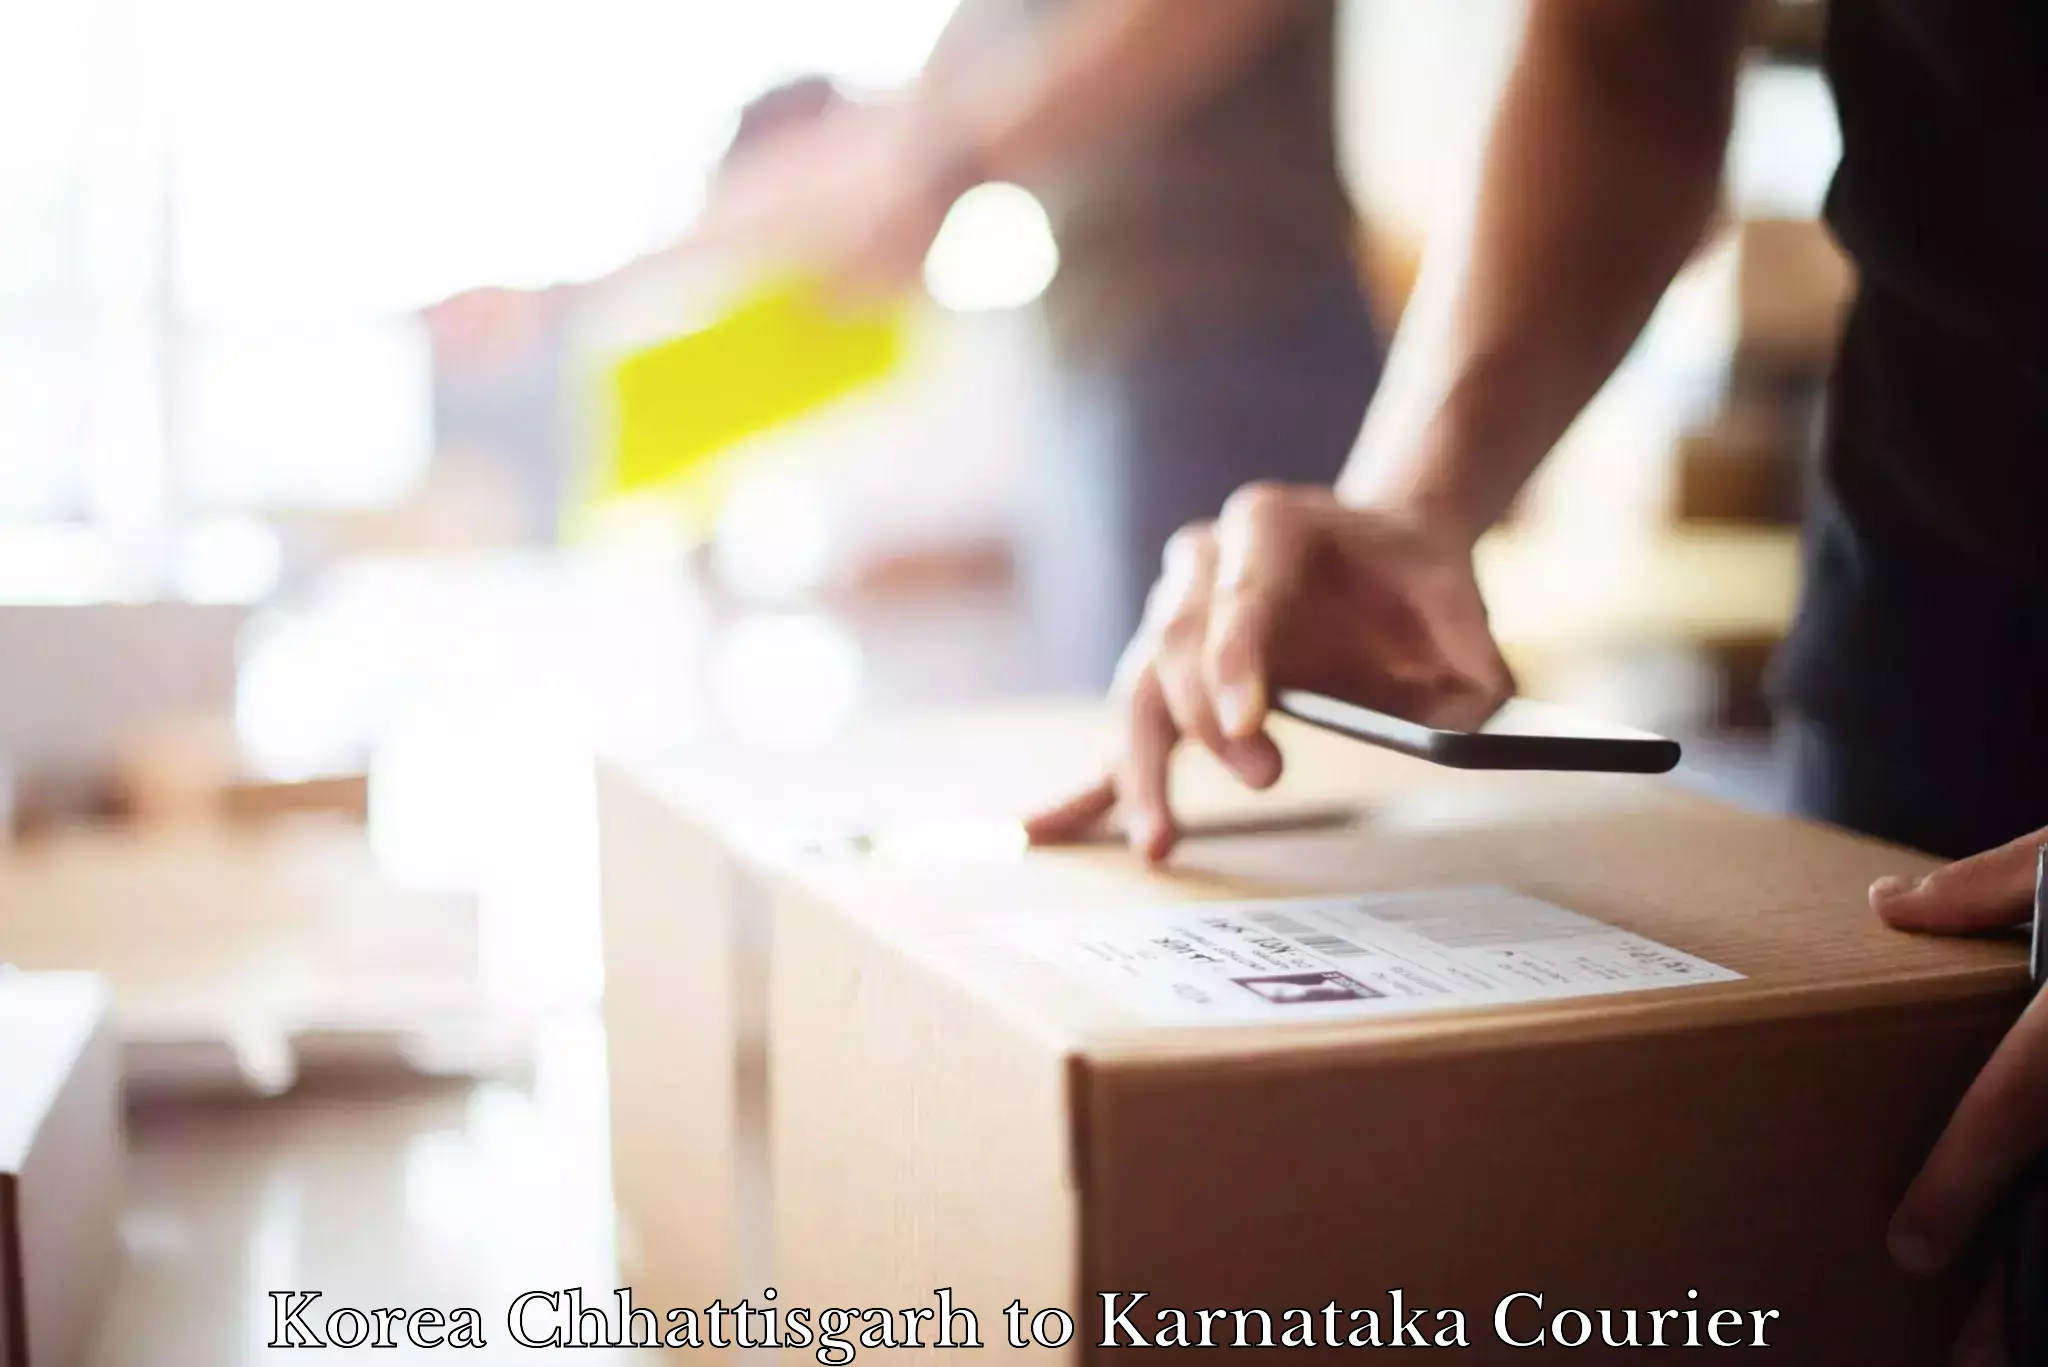 State-of-the-art courier technology Korea Chhattisgarh to Karnataka